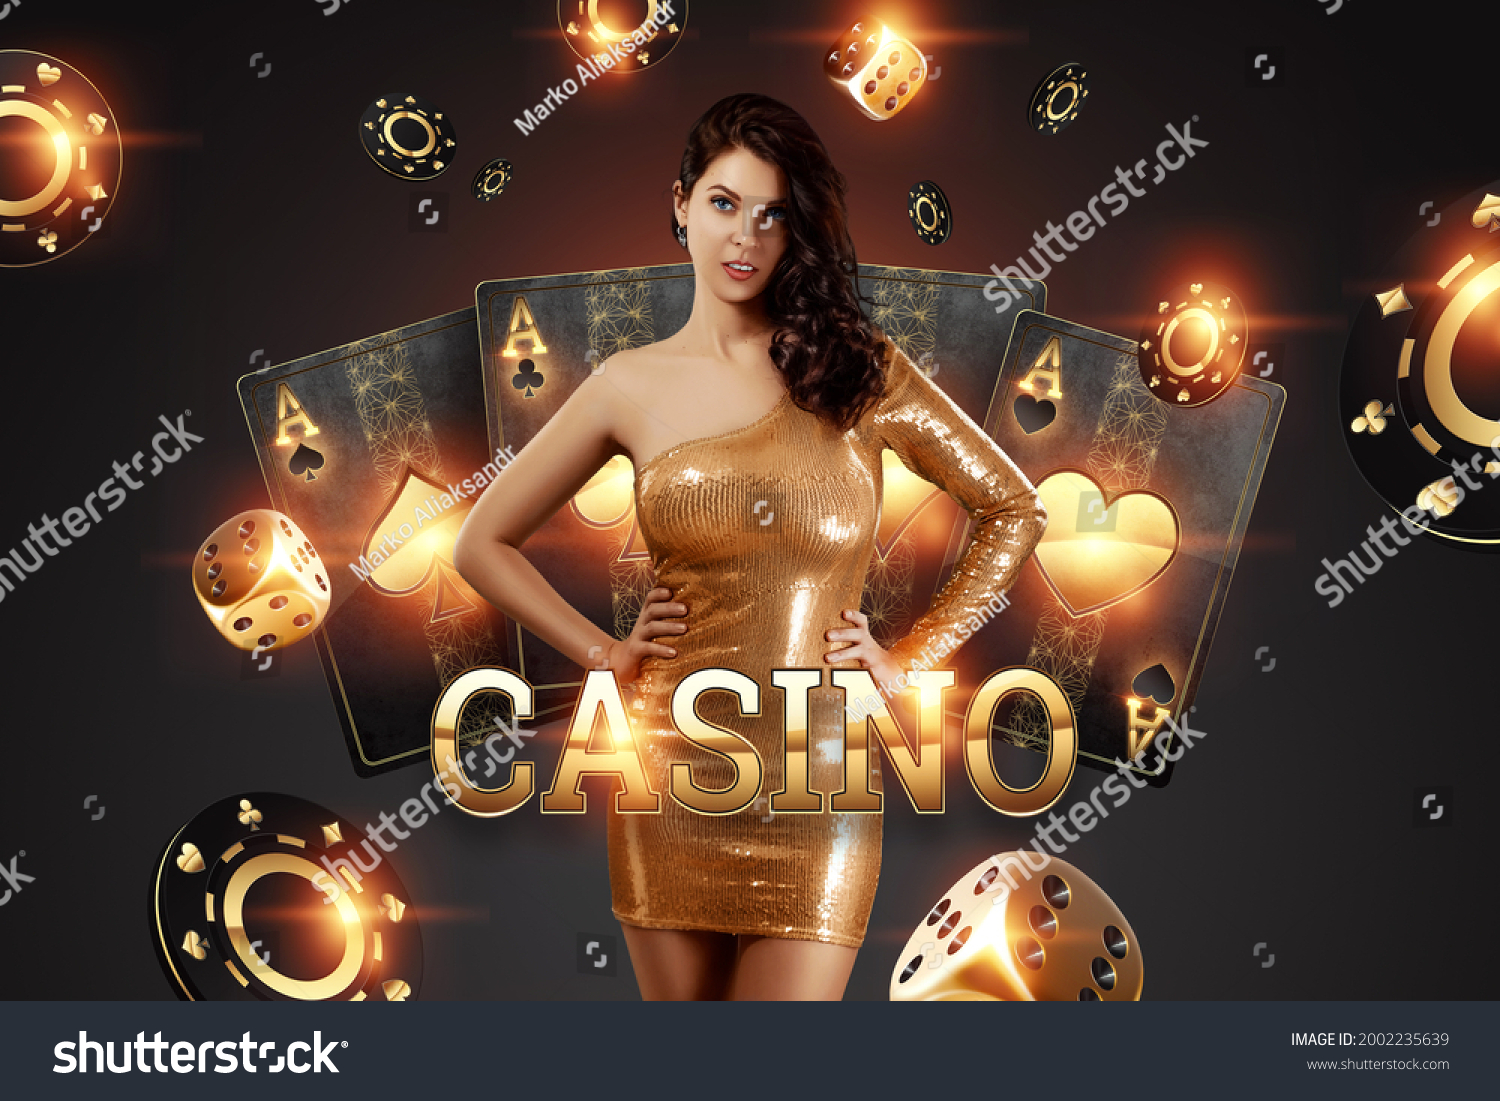 Beautiful girl on the background of the golden casino atrebutics. Winning, casino advertising template, gambling, vegas games, betting #2002235639